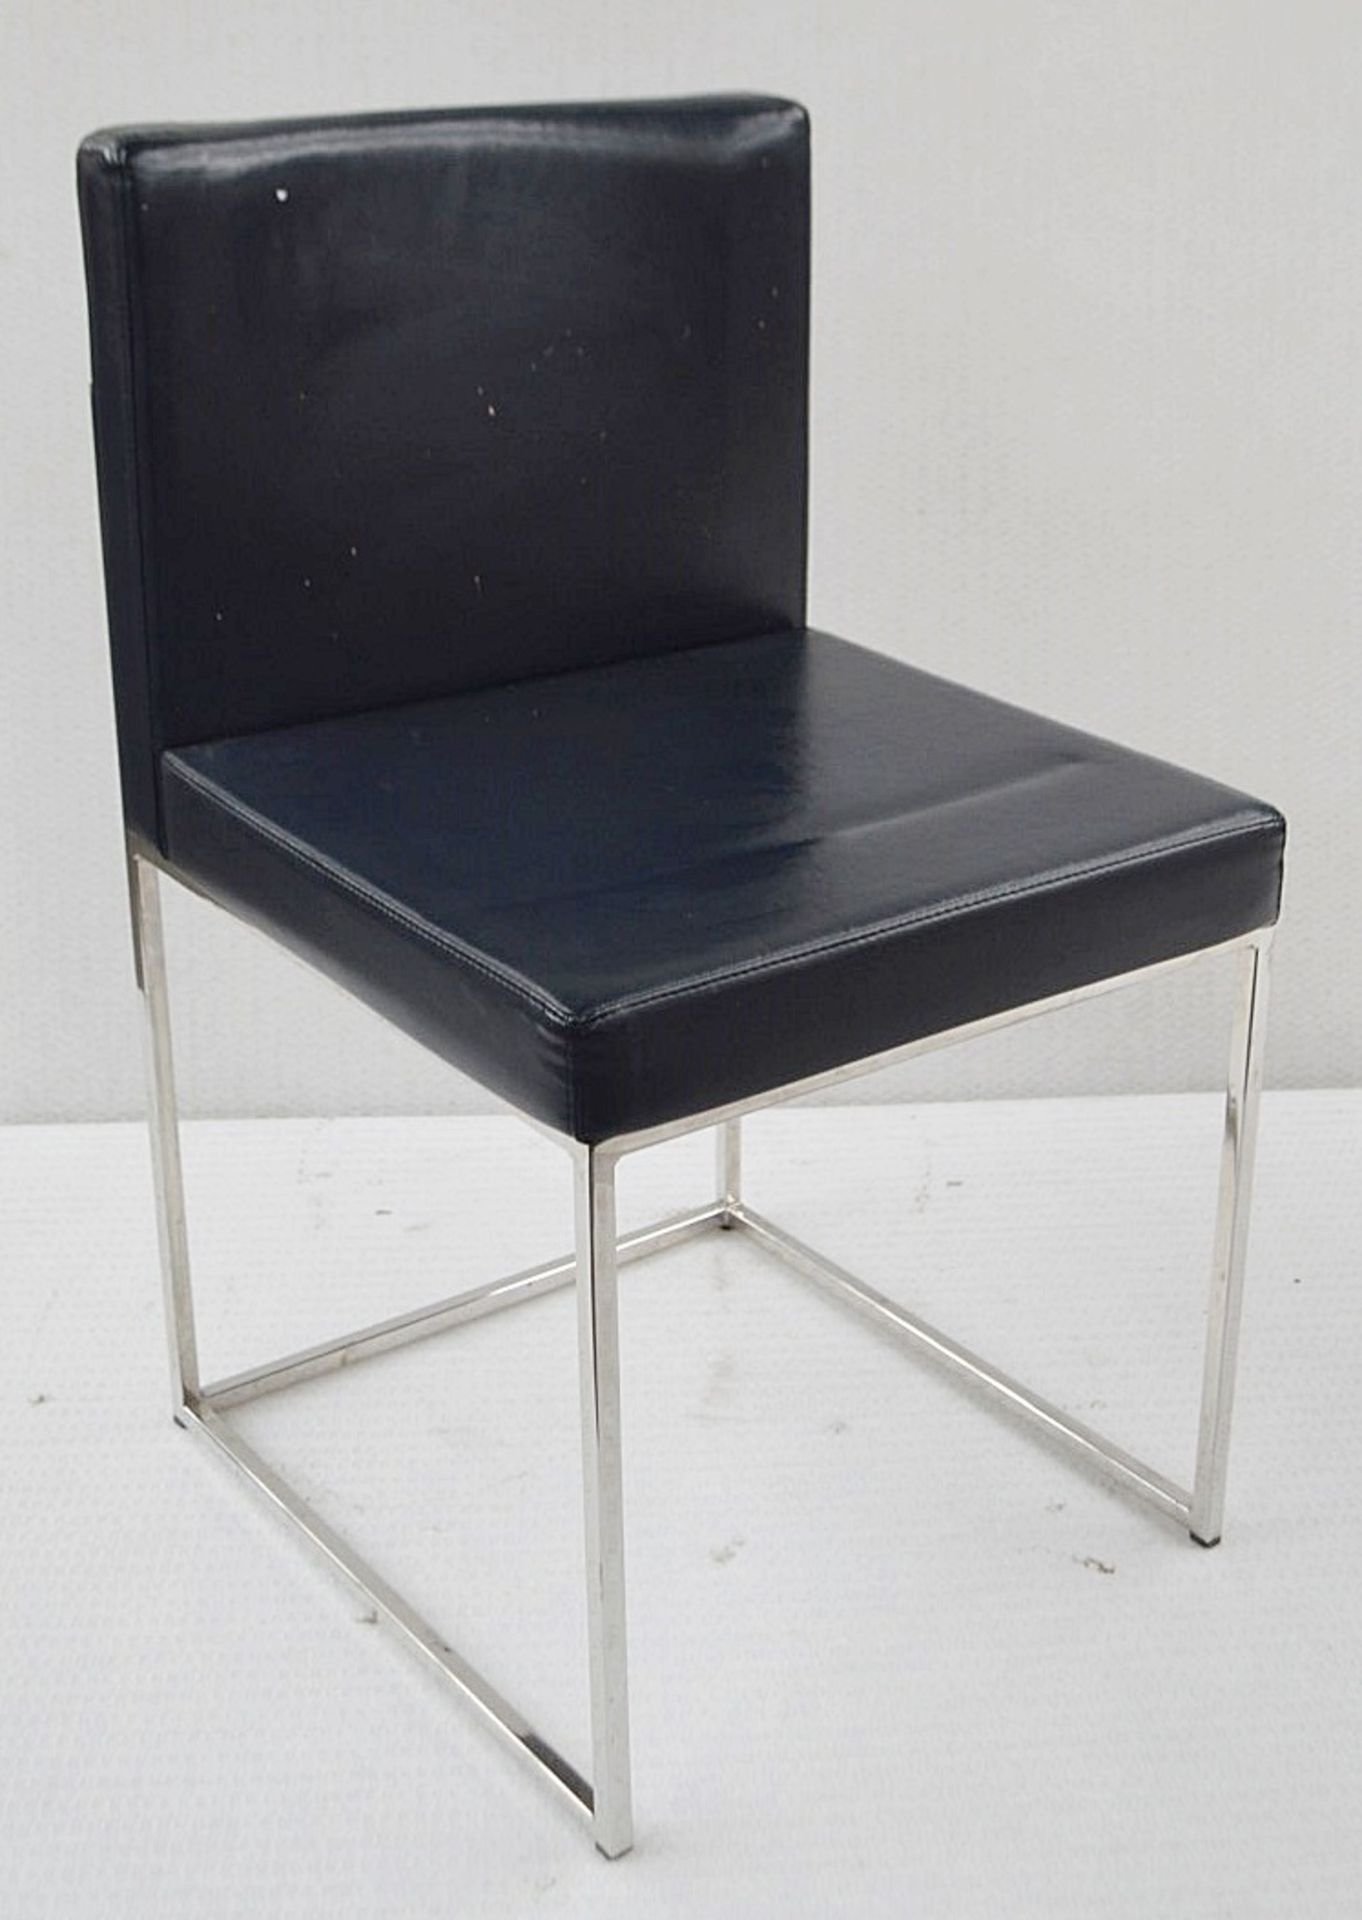 3 x Italian Calligaris Branded Italian Designer Chairs In Dark Blue With 'Estee Lauder' Printed On